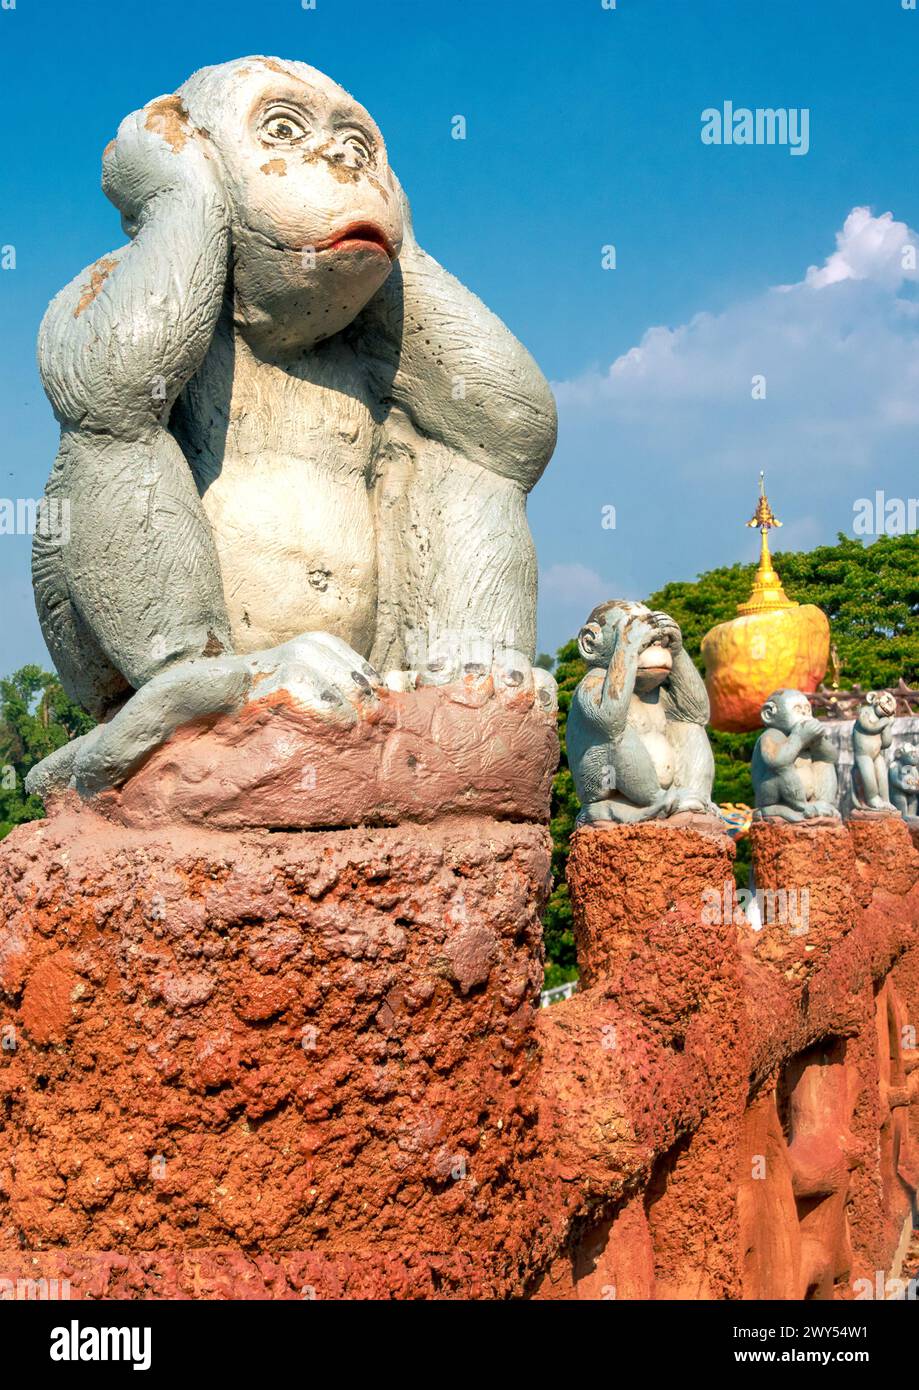 Sculptures of three monkeys sitting on orange columns with ‘see no evil, hear no evil, speak no evil’ theme. Stock Photo